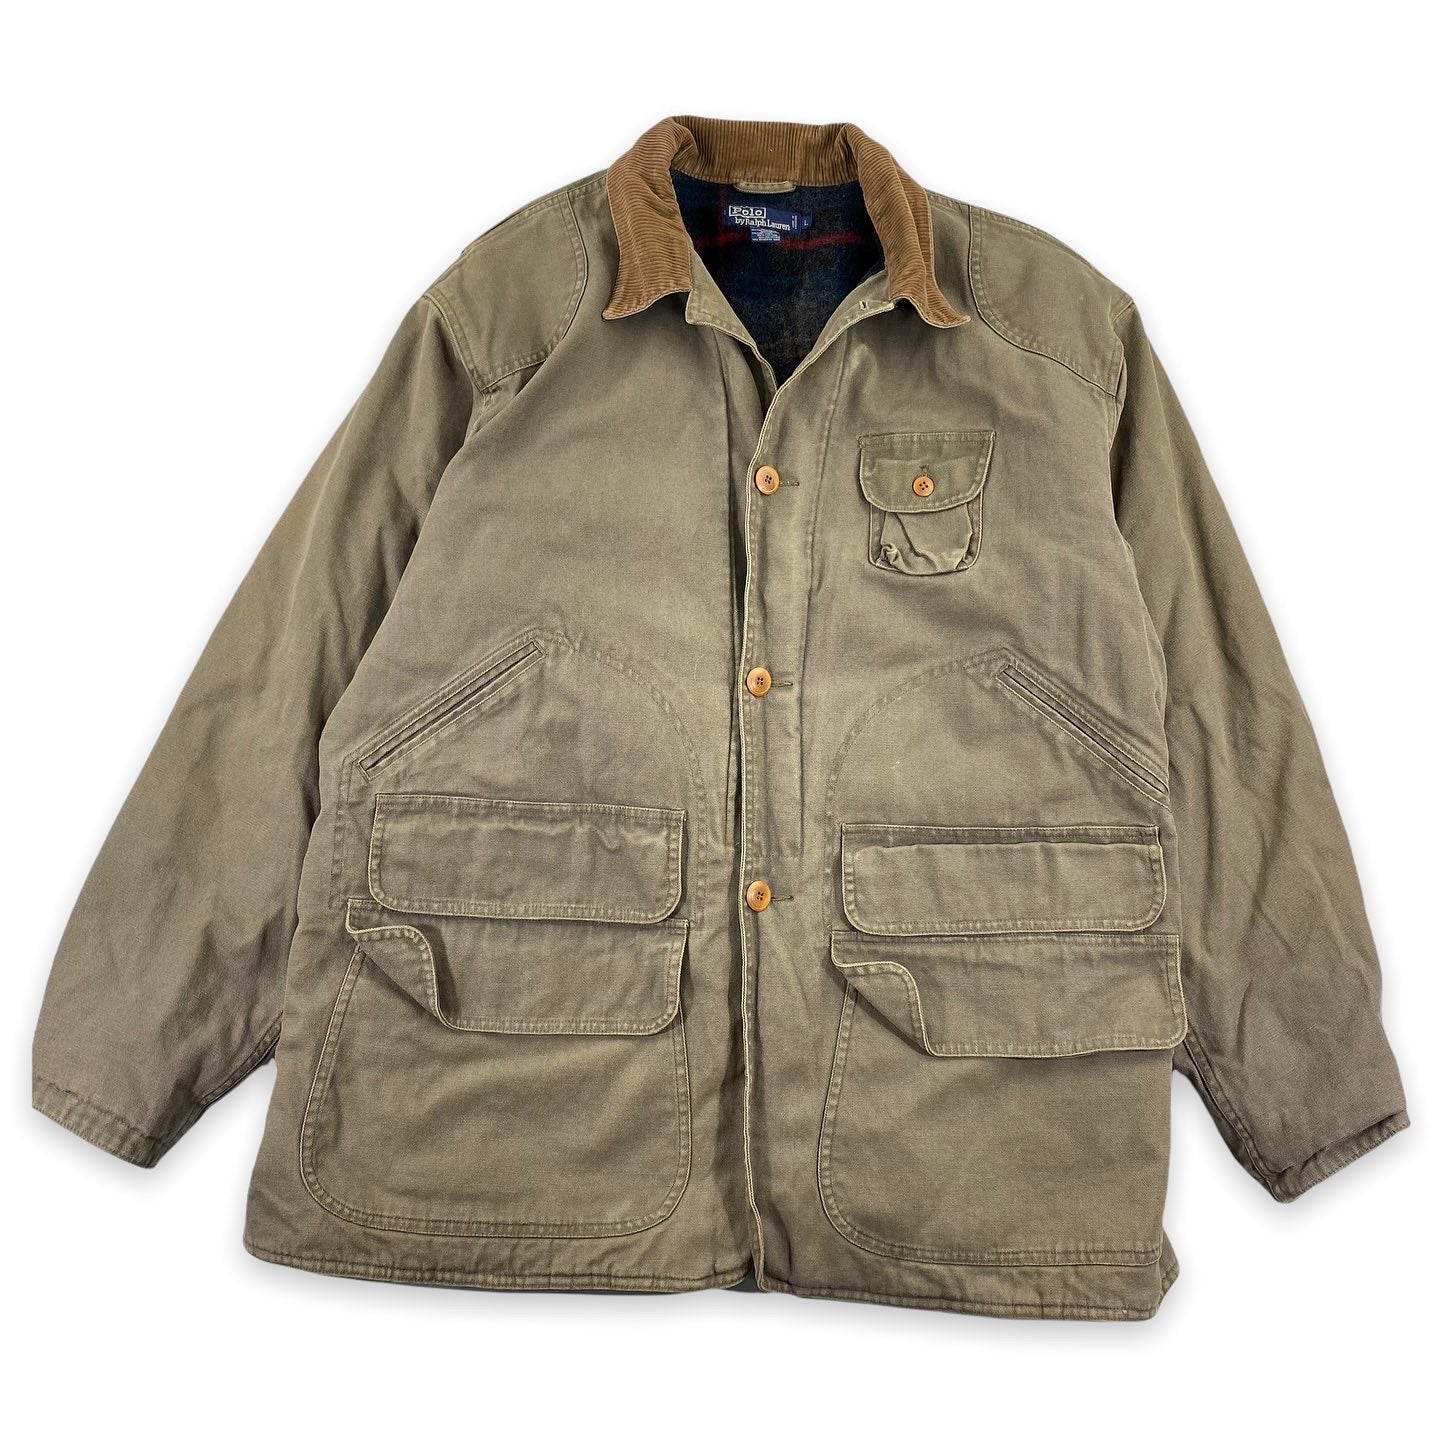 Polo ralph lauren wool lined hunting jacket large – Vintage Sponsor